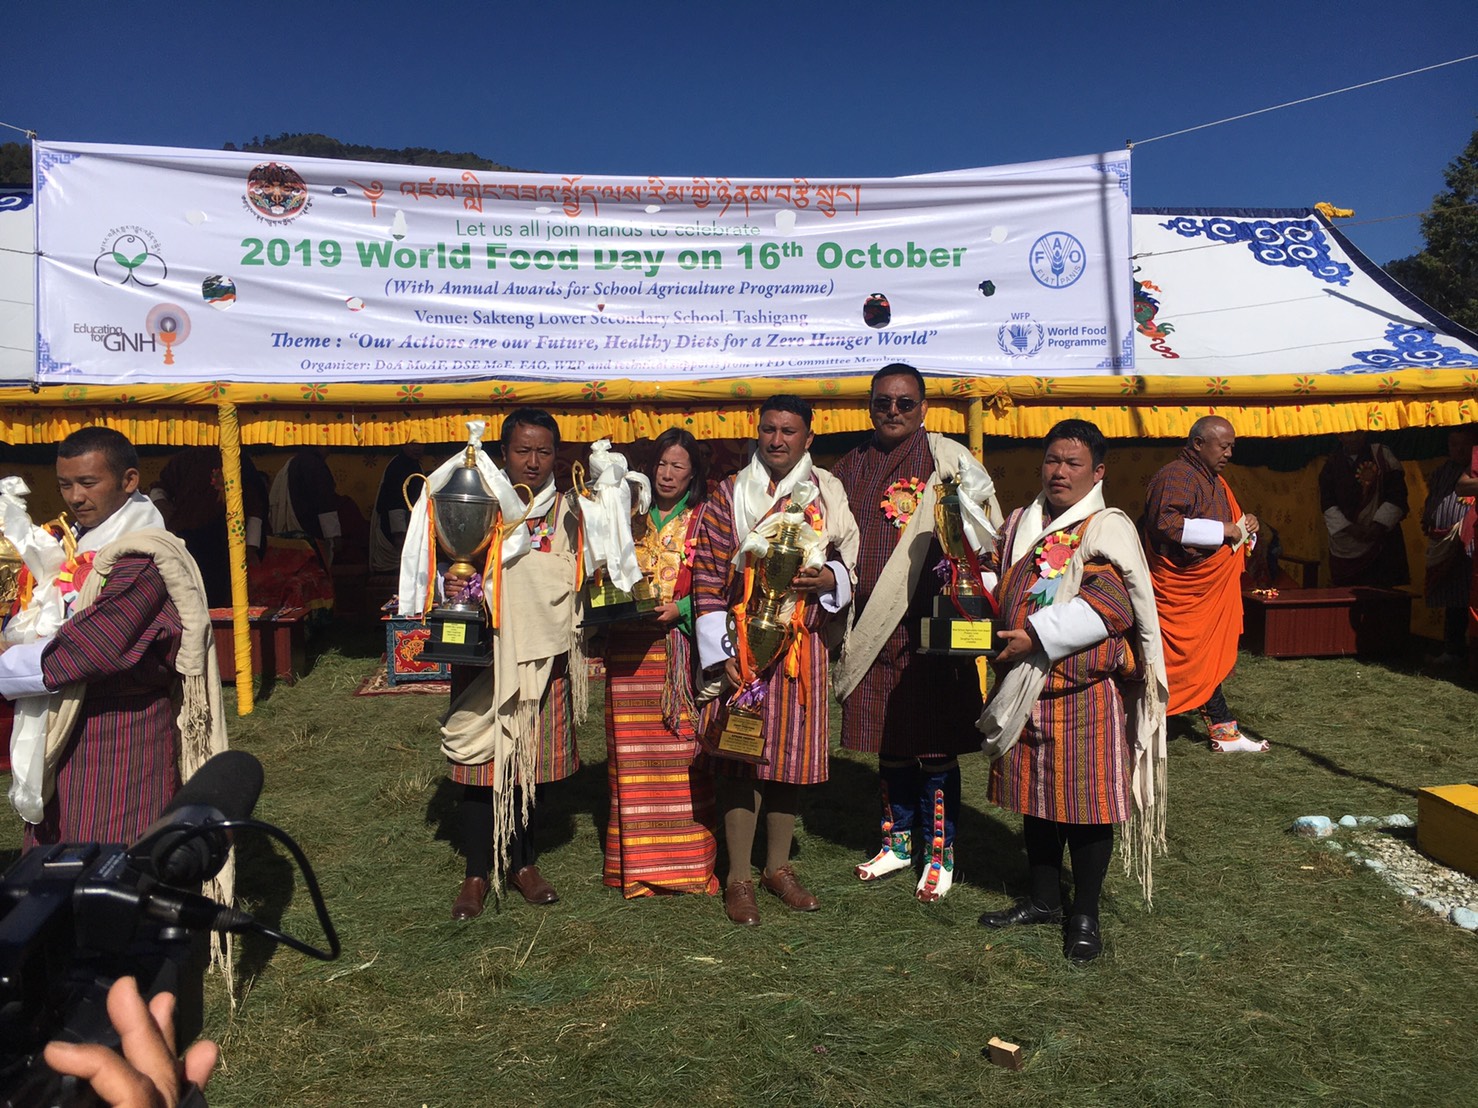 Bhutan's World Food Day 2019